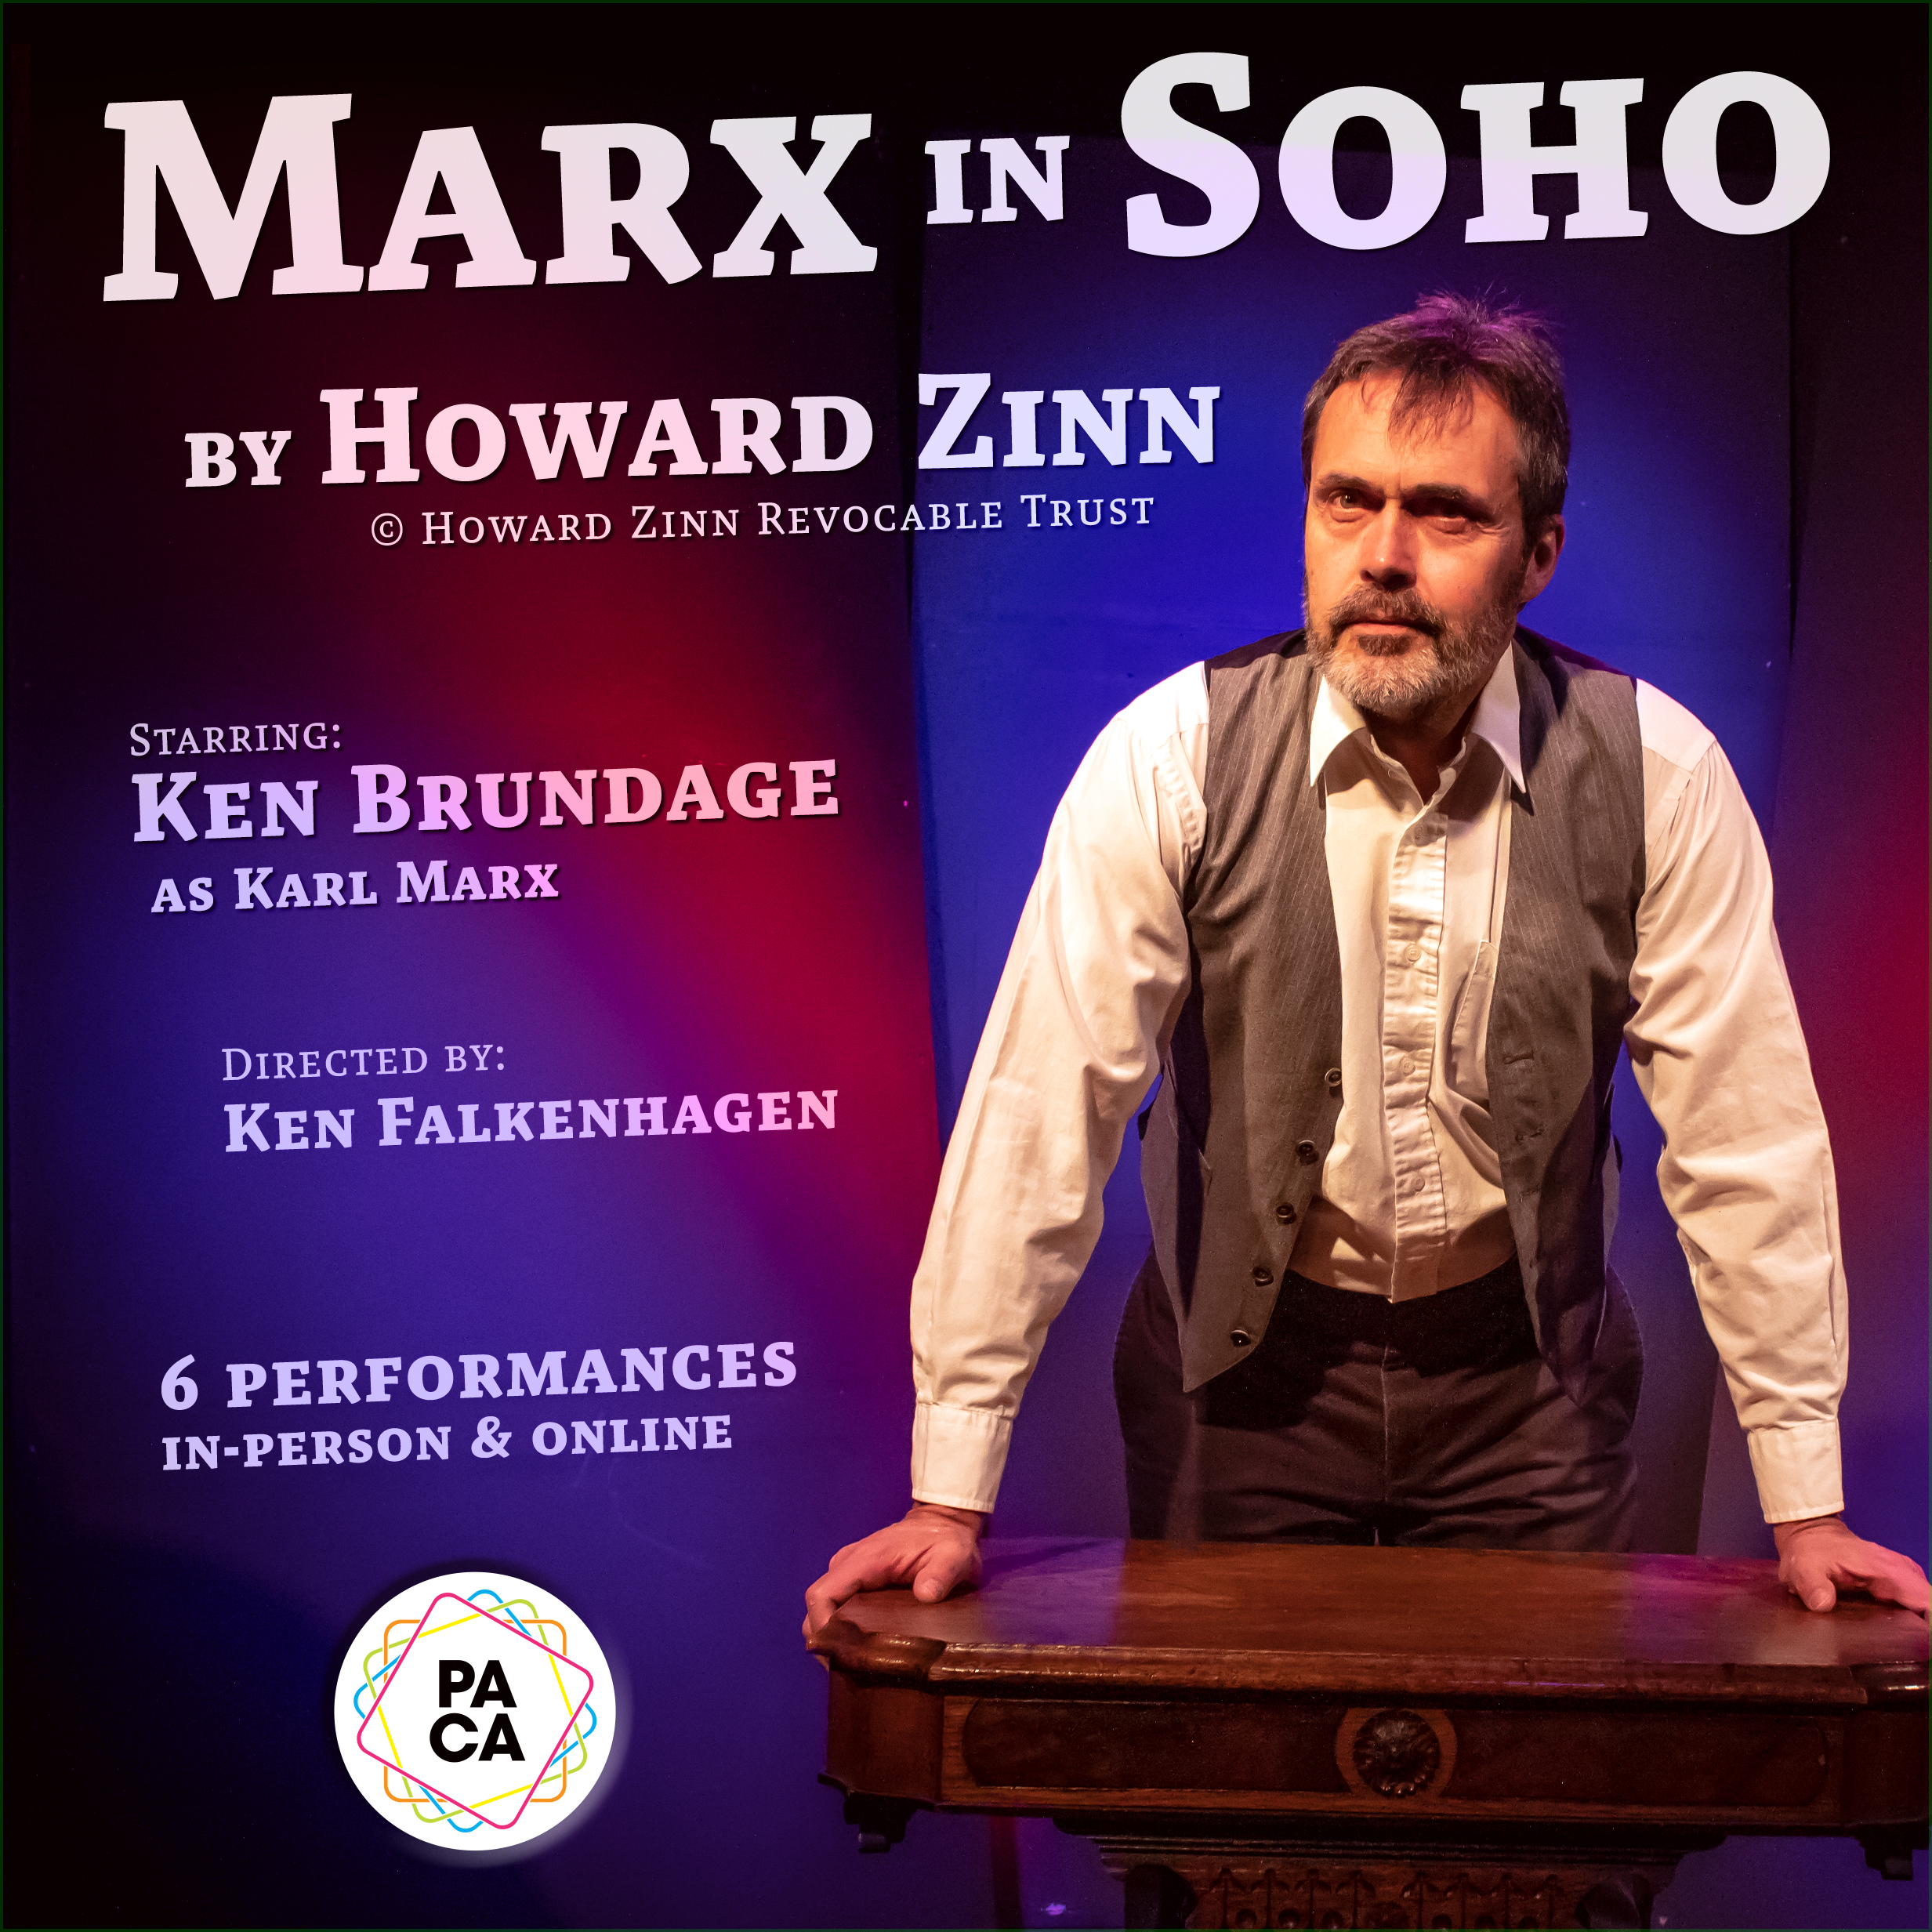 PACA presents: "Marx in SoHo" by Howard Zinn